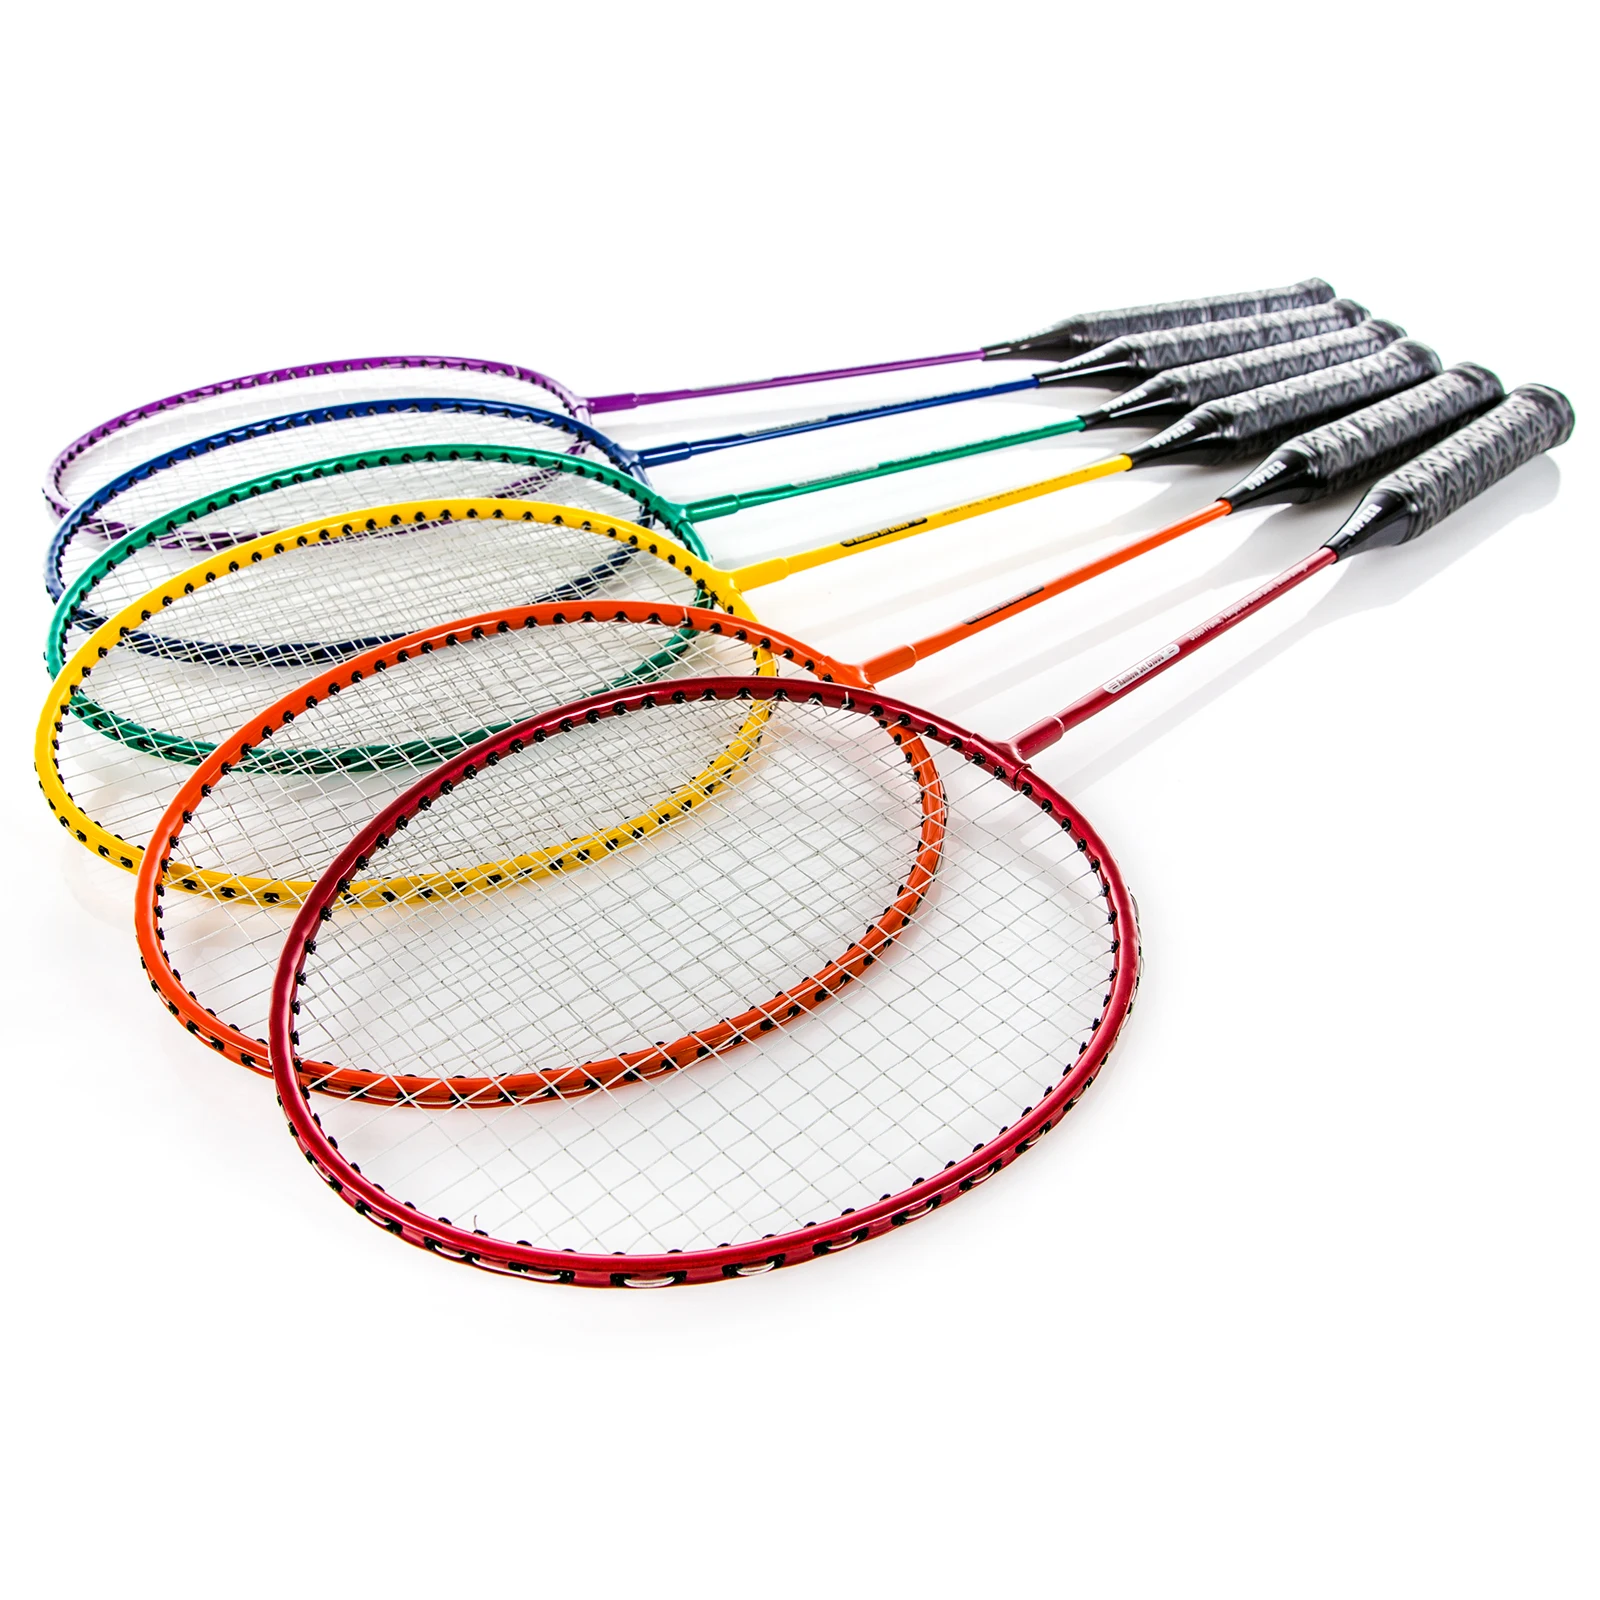 Stemmen roterend Aanleg Durable Hot Selling Badminton Set 4 Rackets Favorable Price Badminton  Products Lining Badminton Racket - Buy Cheap Badminton Rackets,Ball  Badminton Racket,Ball Badminton Racket Product on Alibaba.com